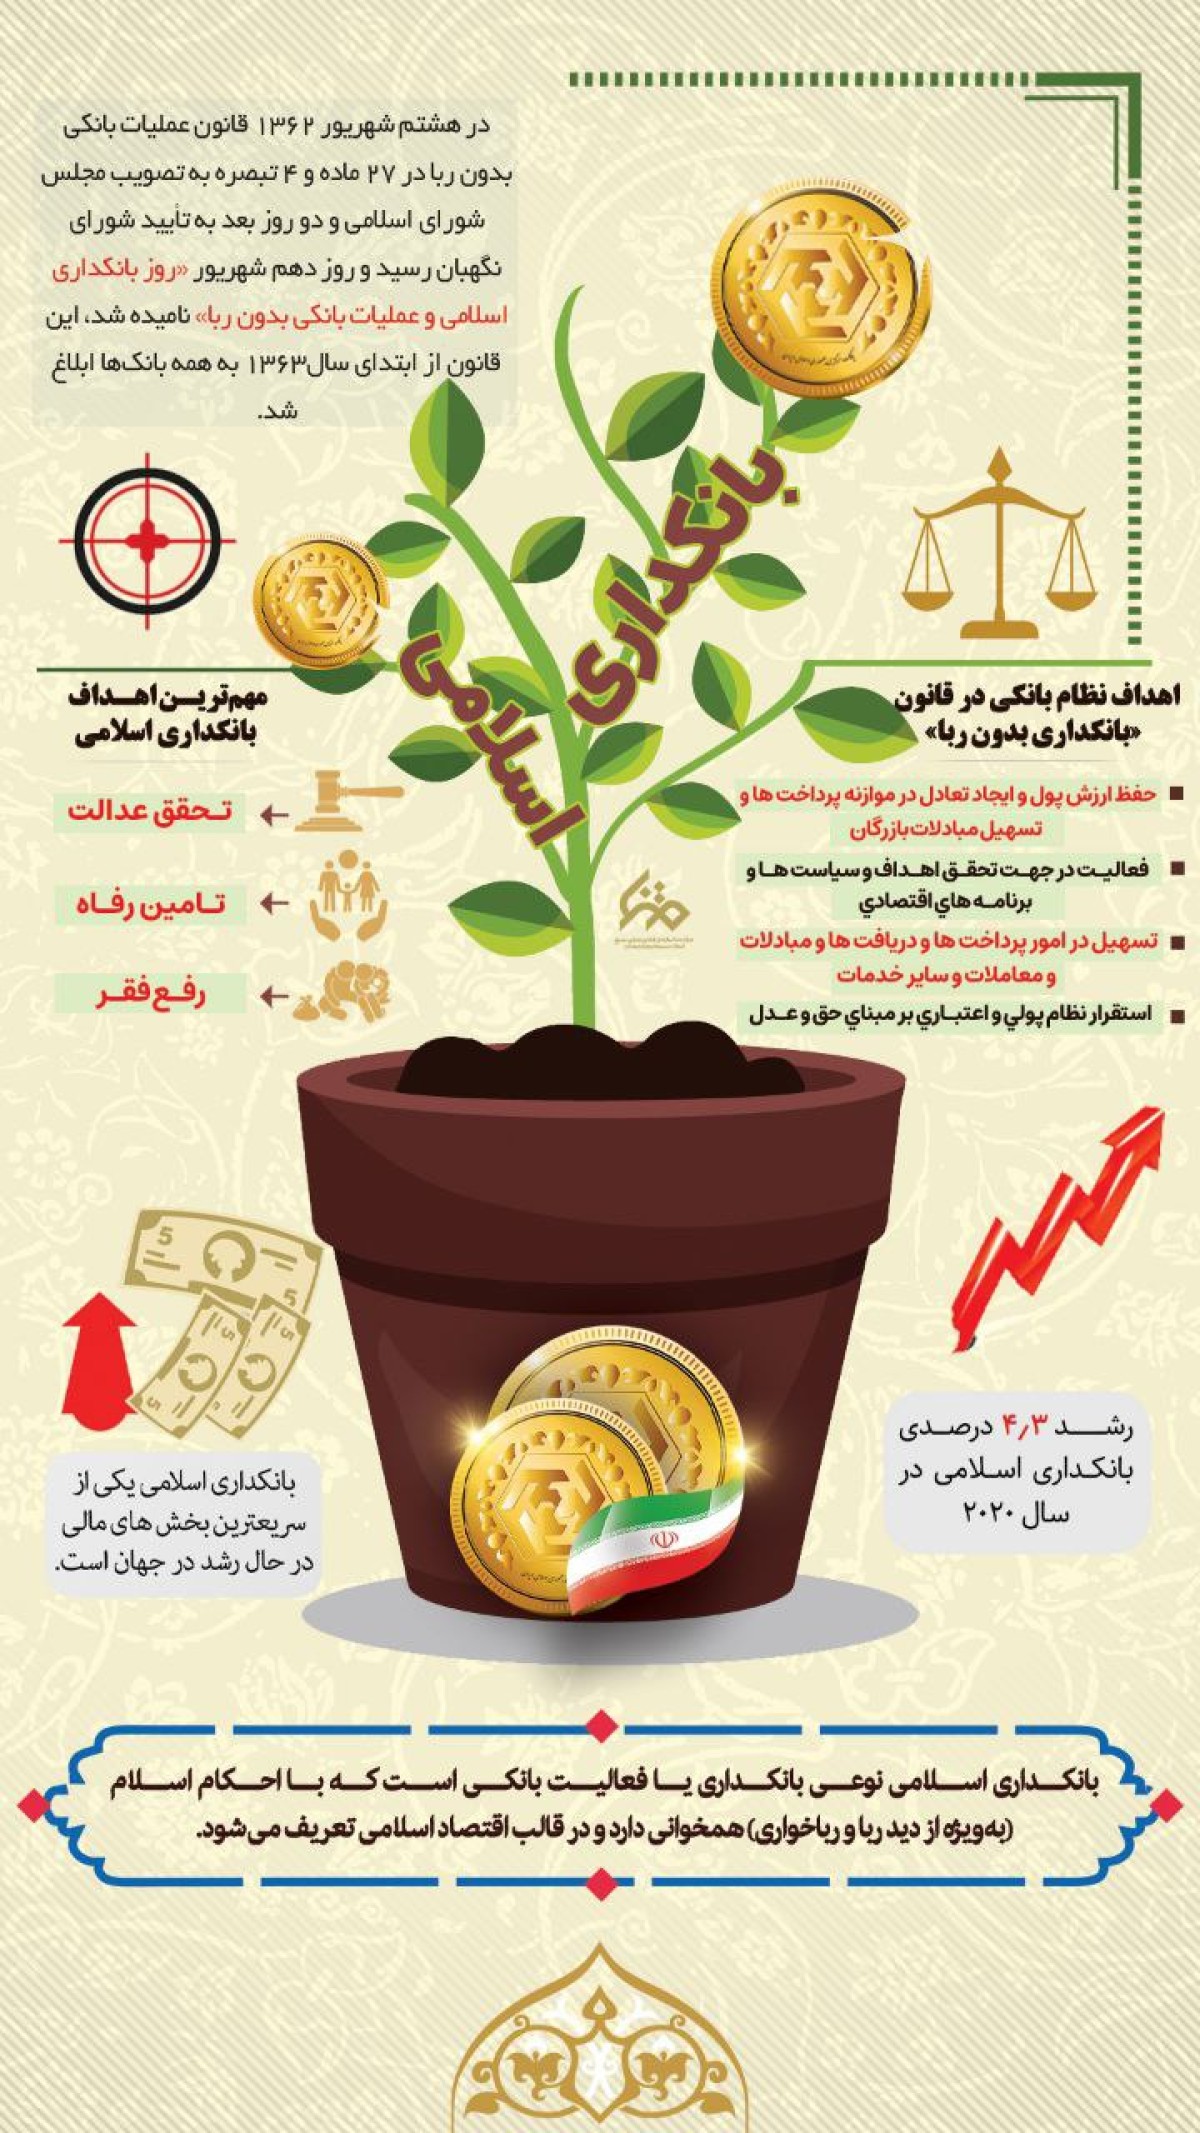 اینفوگرافیک : بانکداری اسلامی